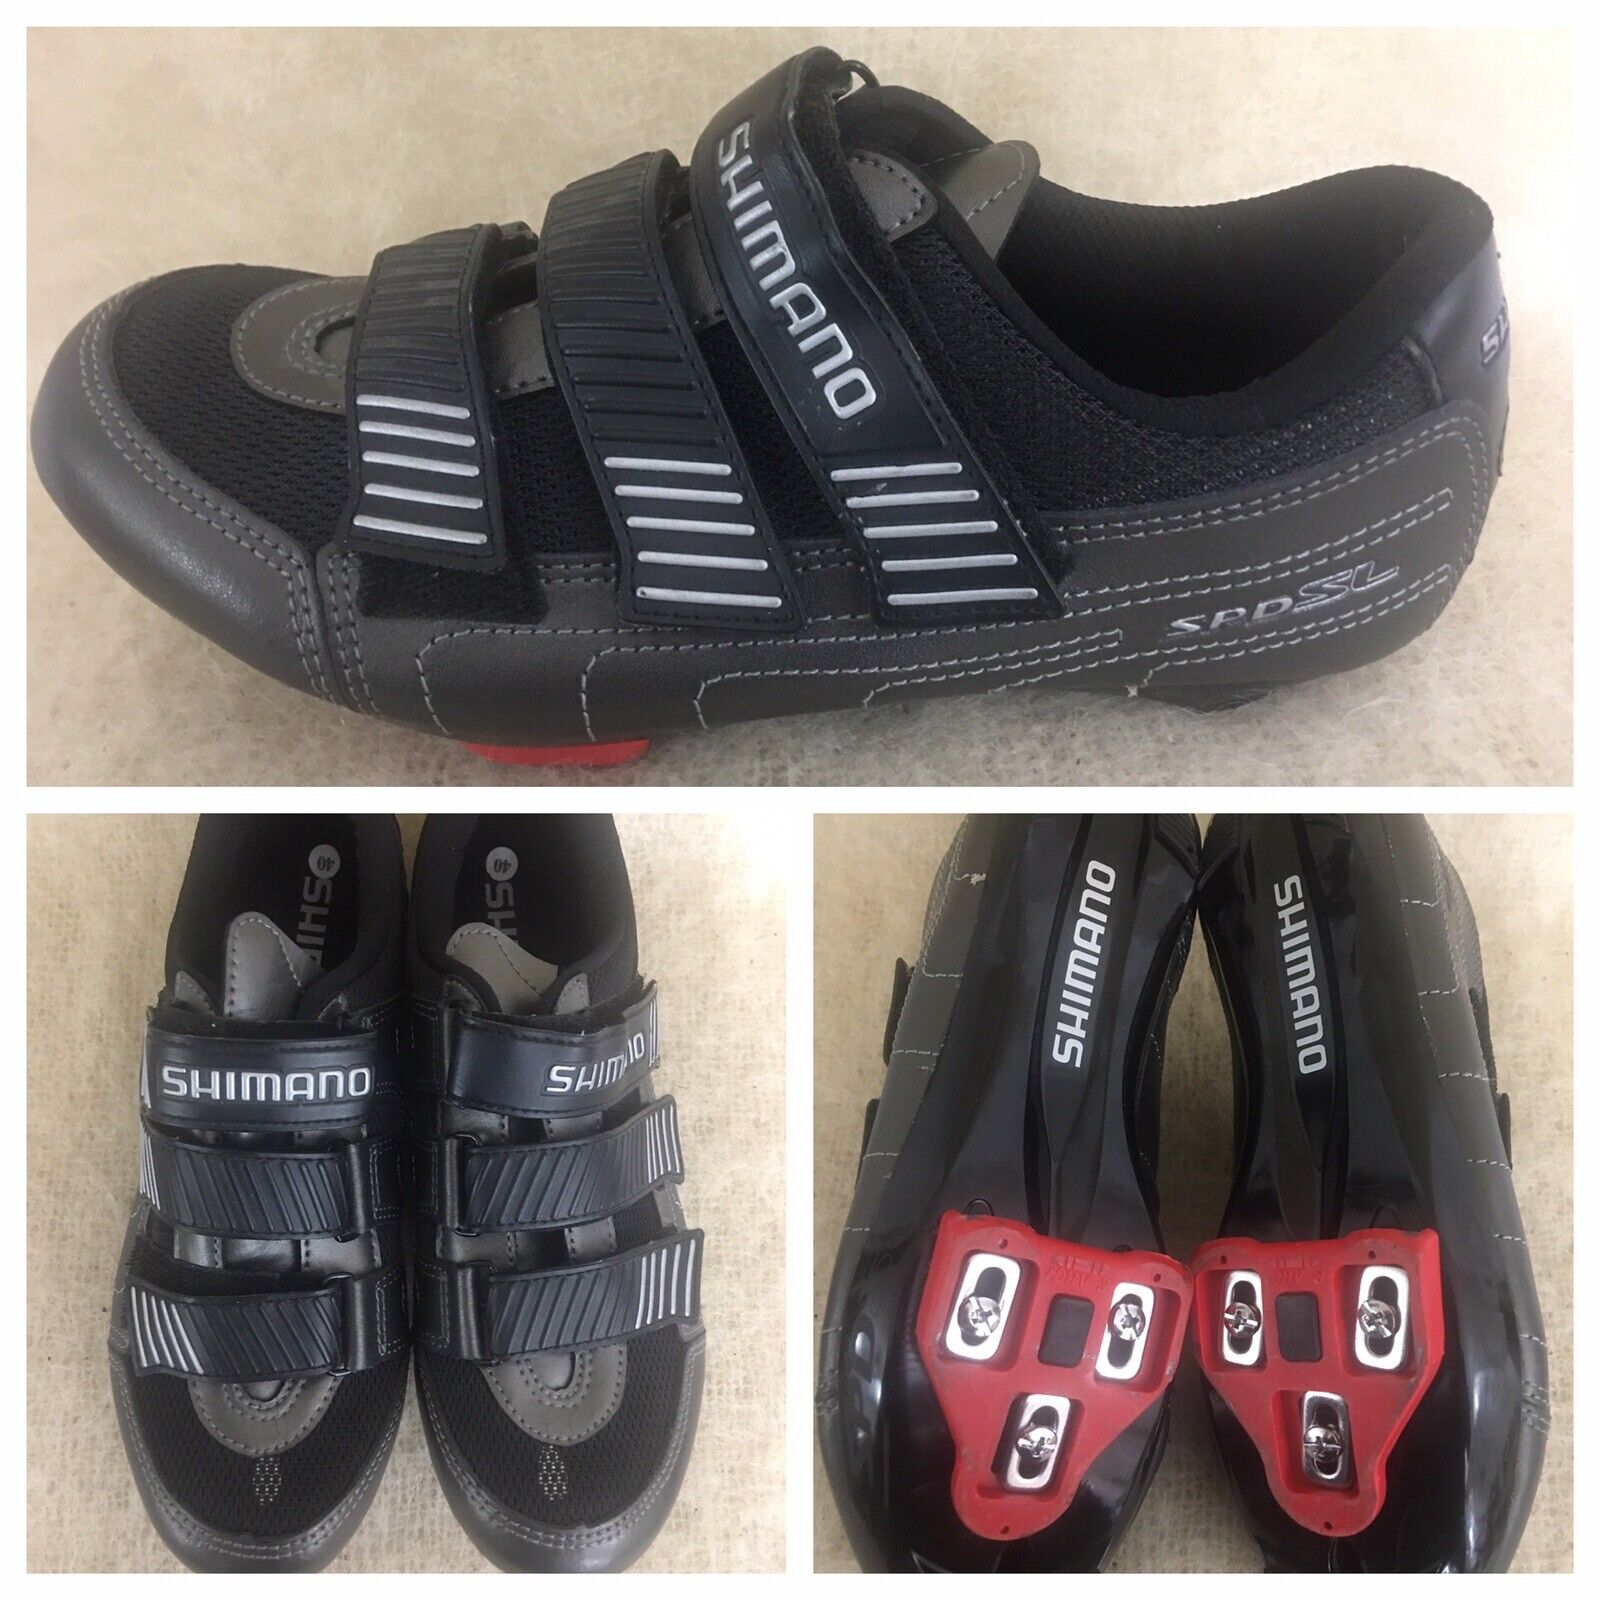 Shimano Max 69% OFF SH-RA80 Road Cycling Shoes EU 40 Black 3 US Steel 7 Adj Gorgeous